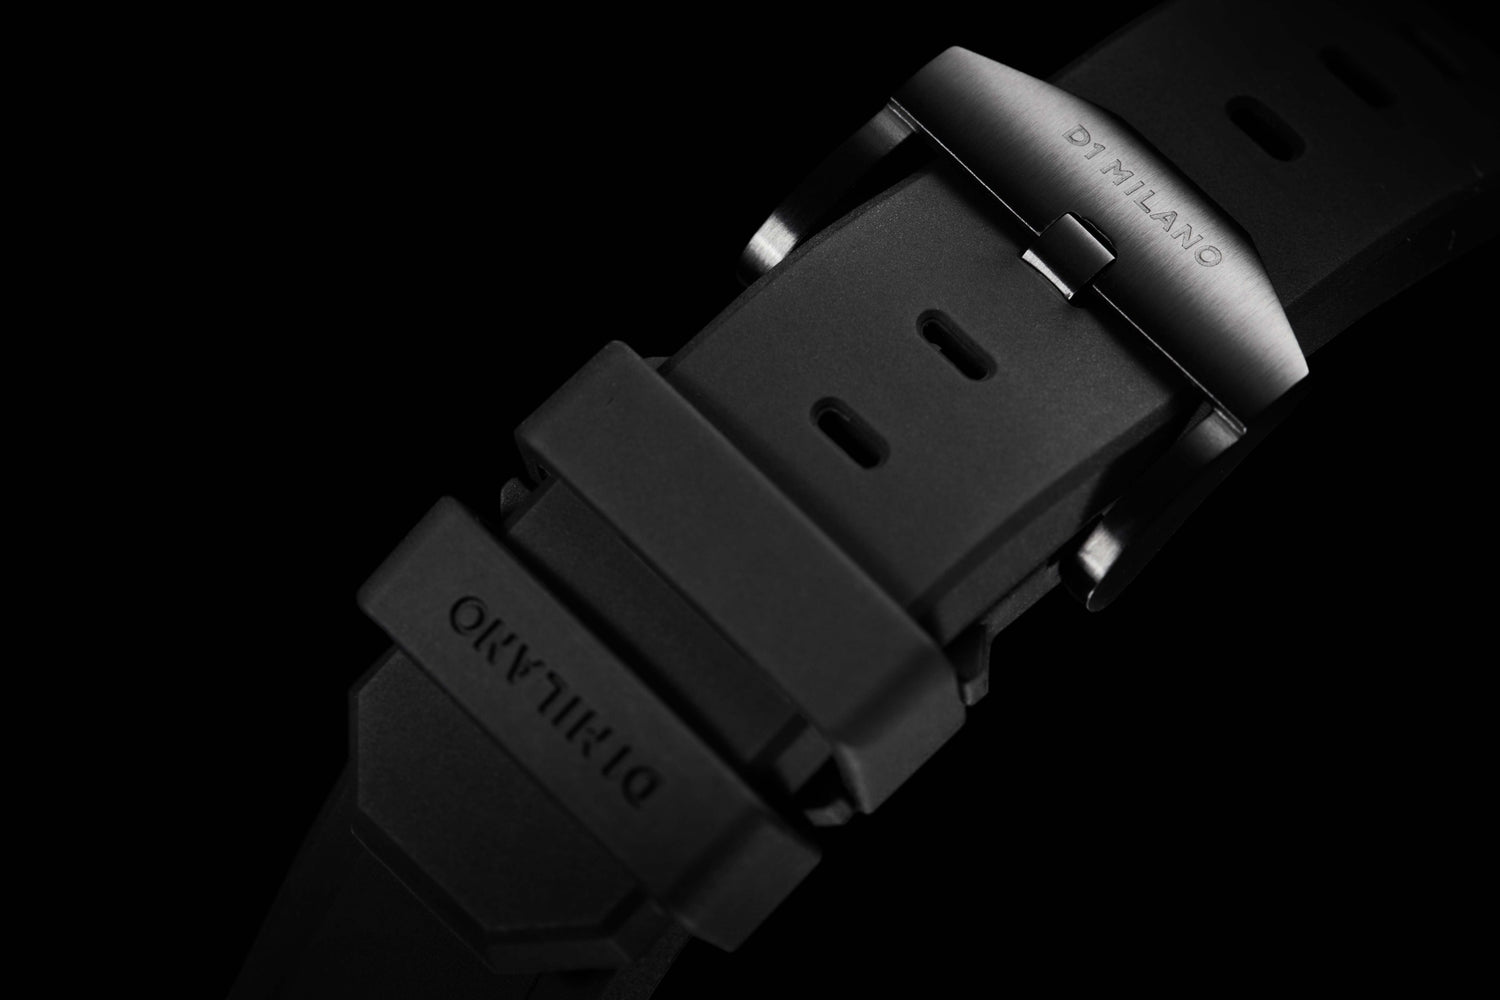 D1 Milano Carbonlite Carbon 40.5mm Watch-Quartz Watches-PEROZ Accessories